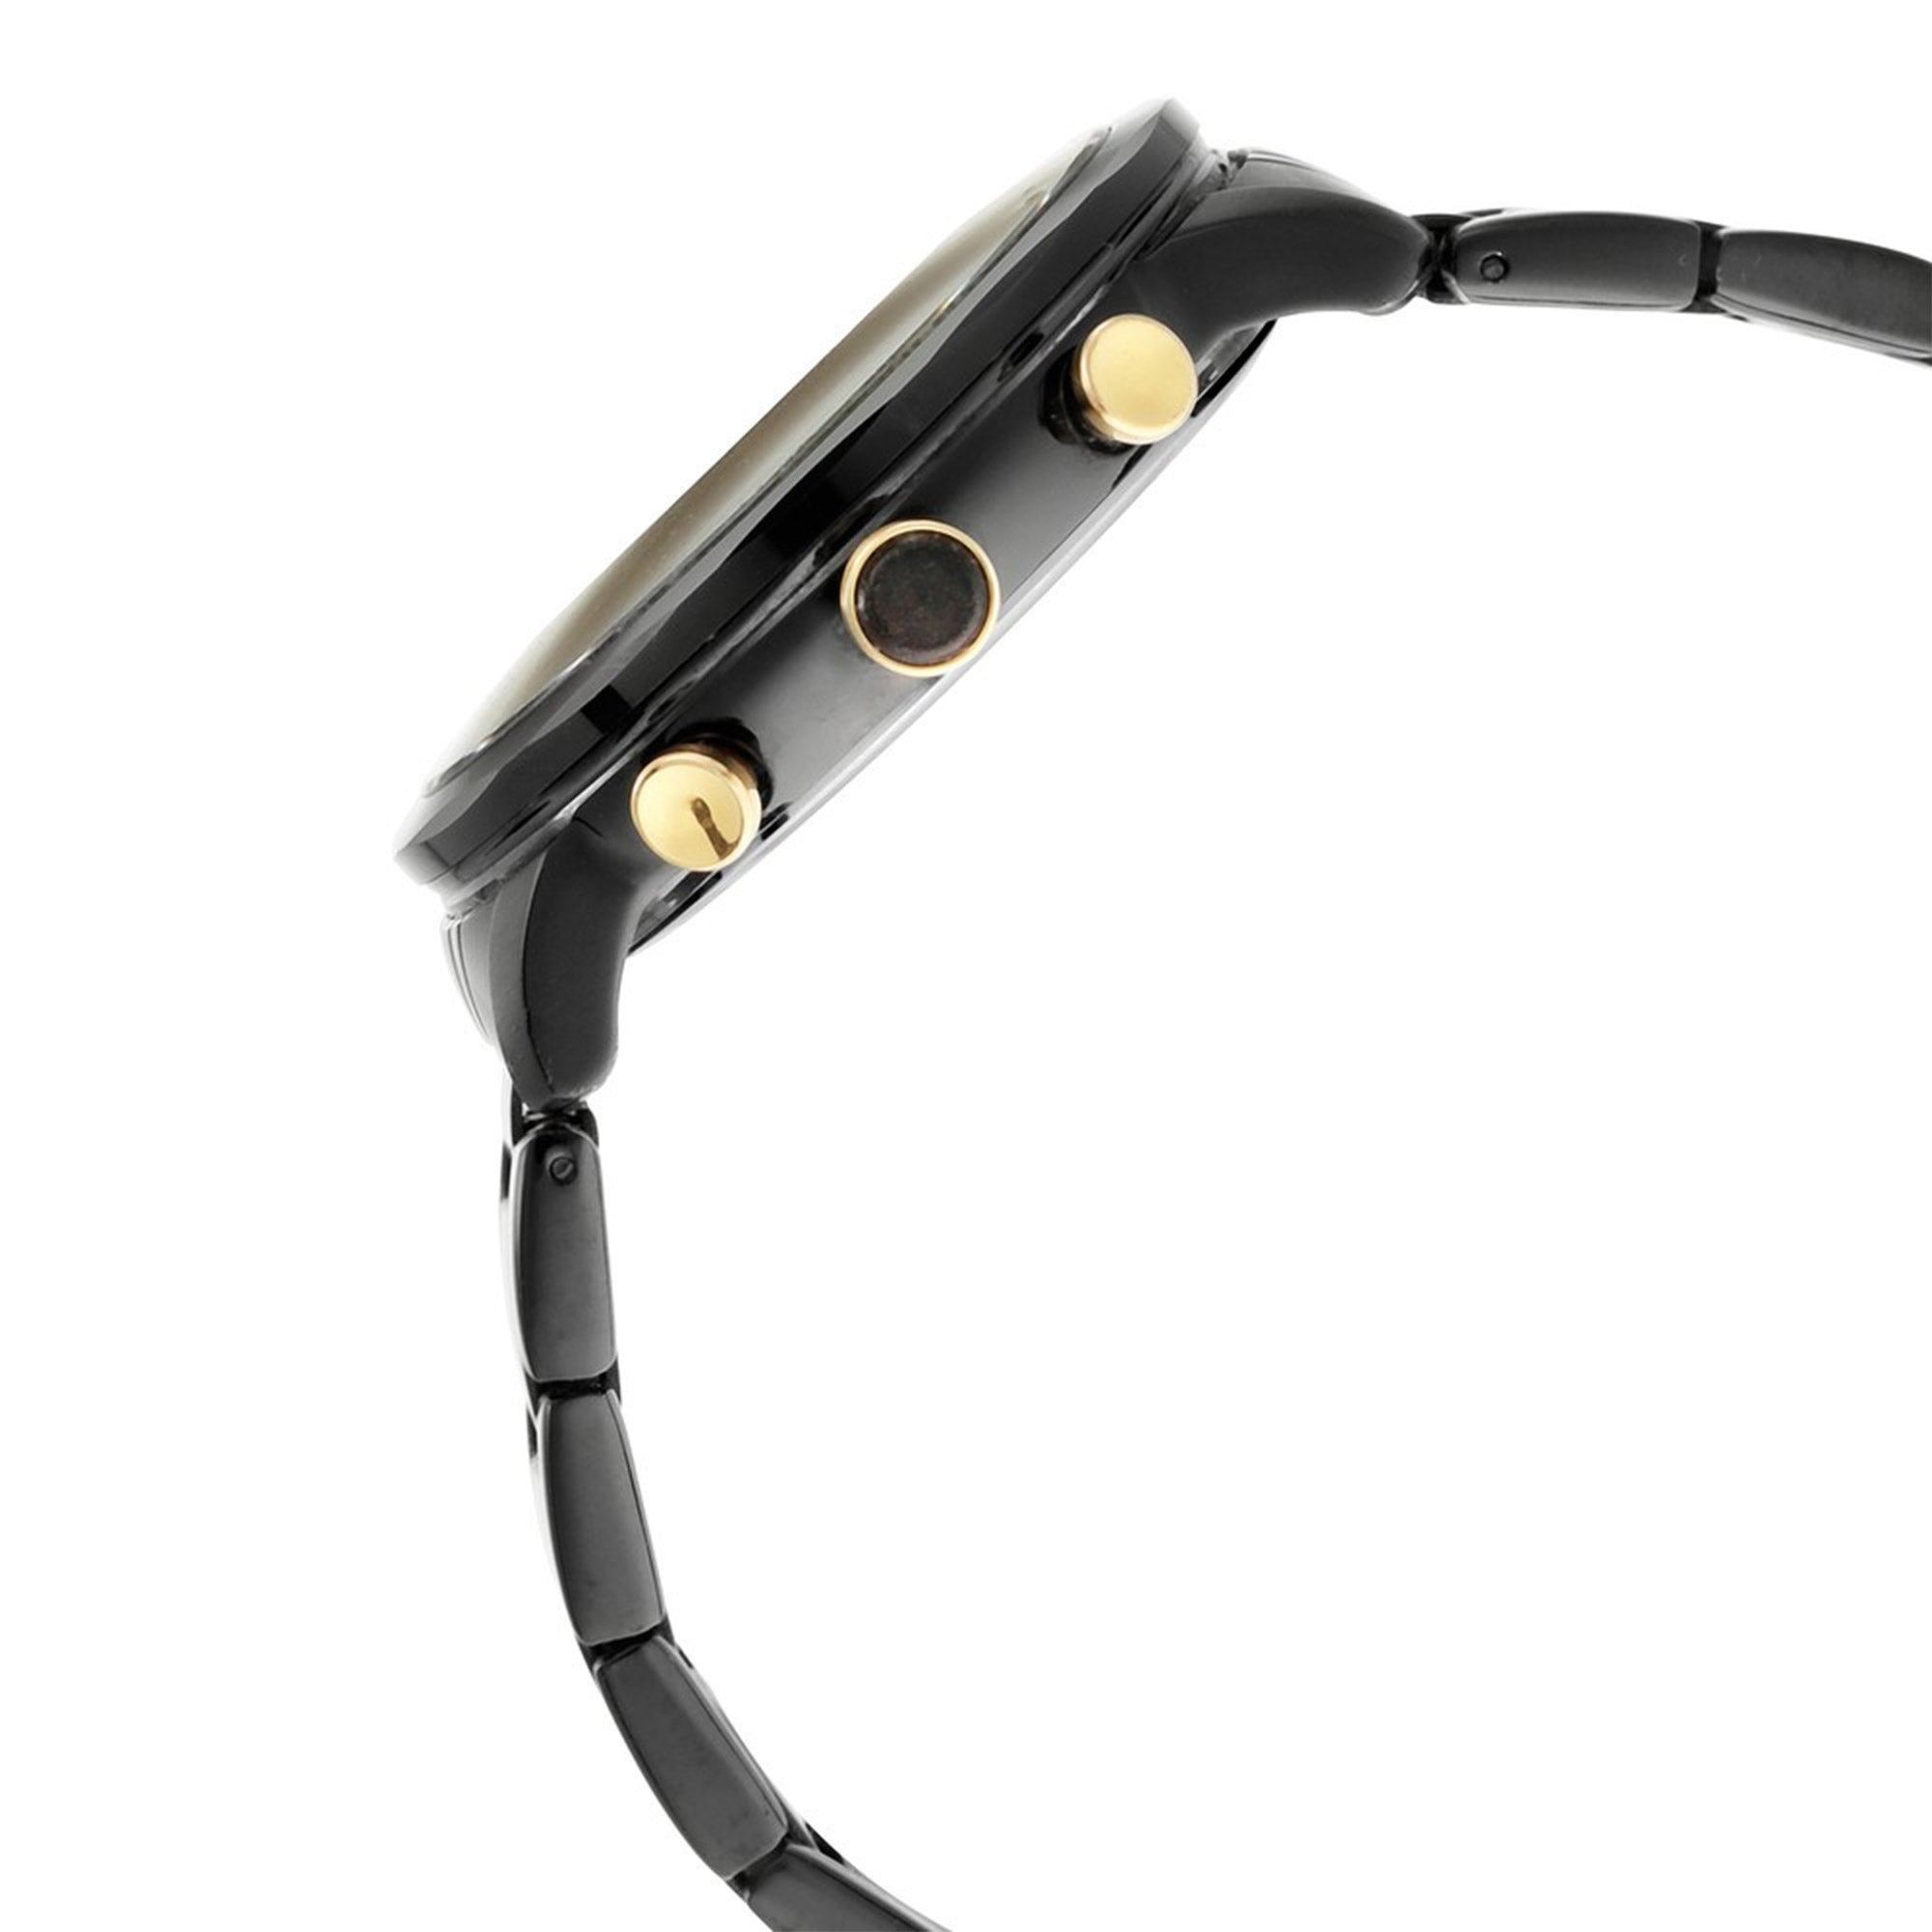 Titan Quartz Multifunction Black Dial Metal Strap Watch for Men